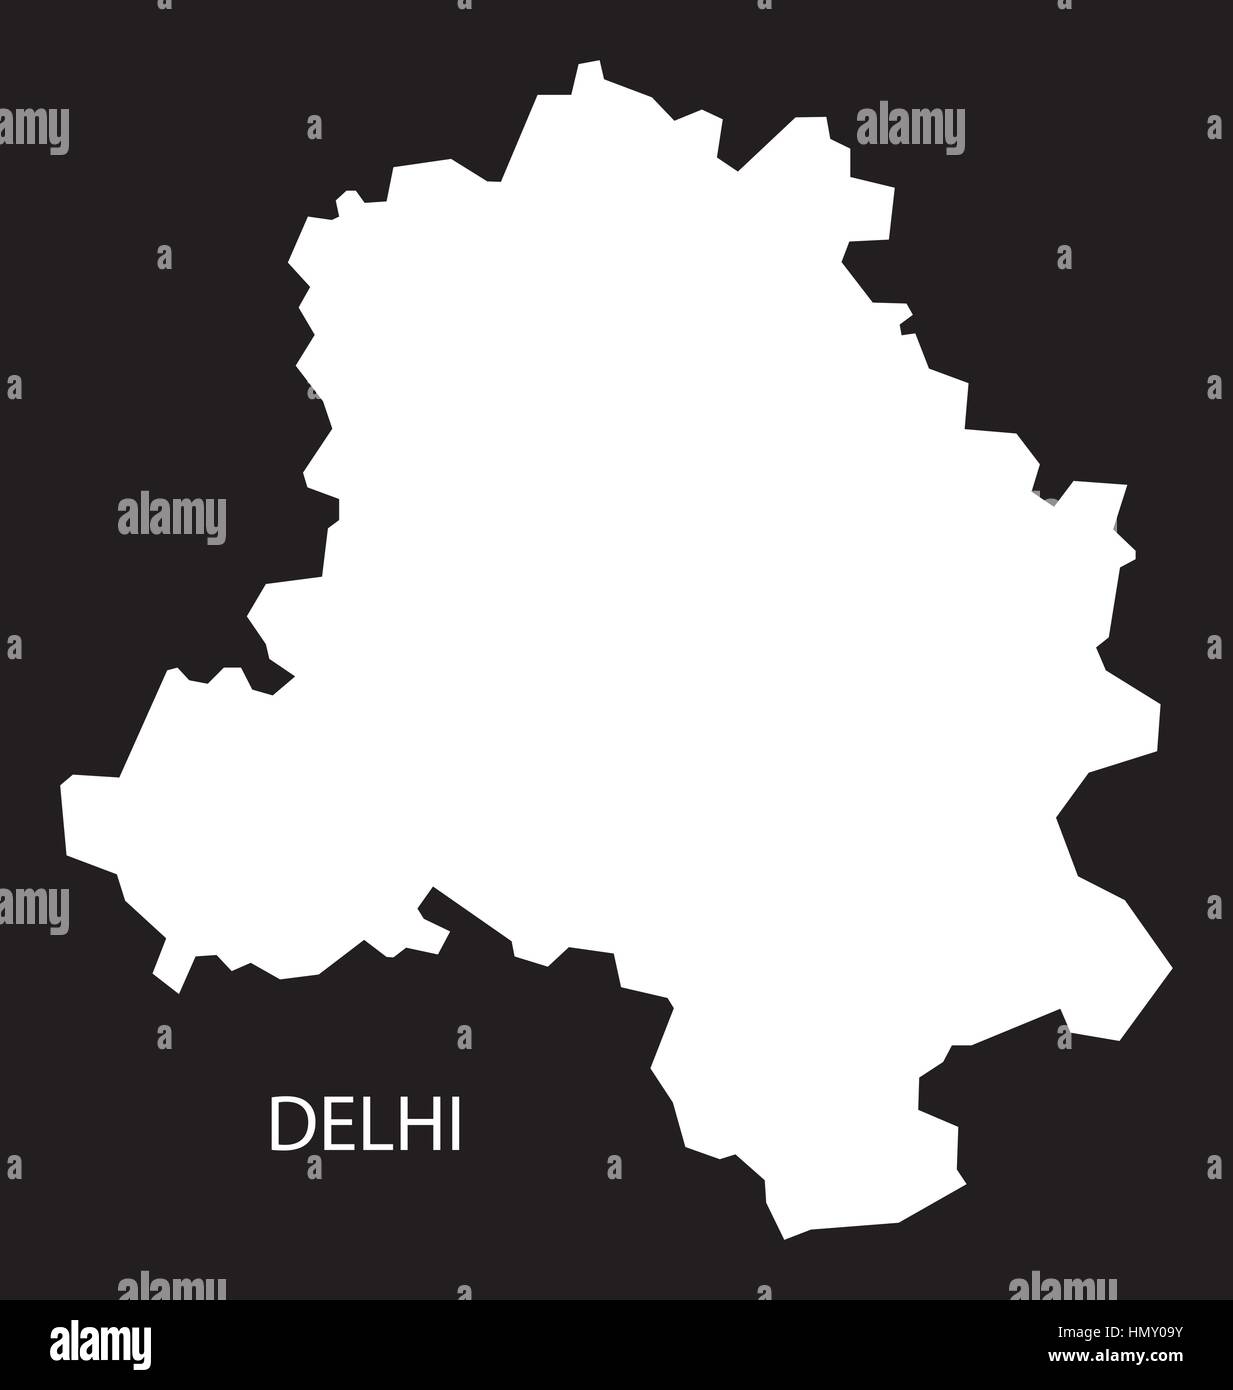 Delhi Indien Karte schwarz invertiert silhouette Stock Vektor